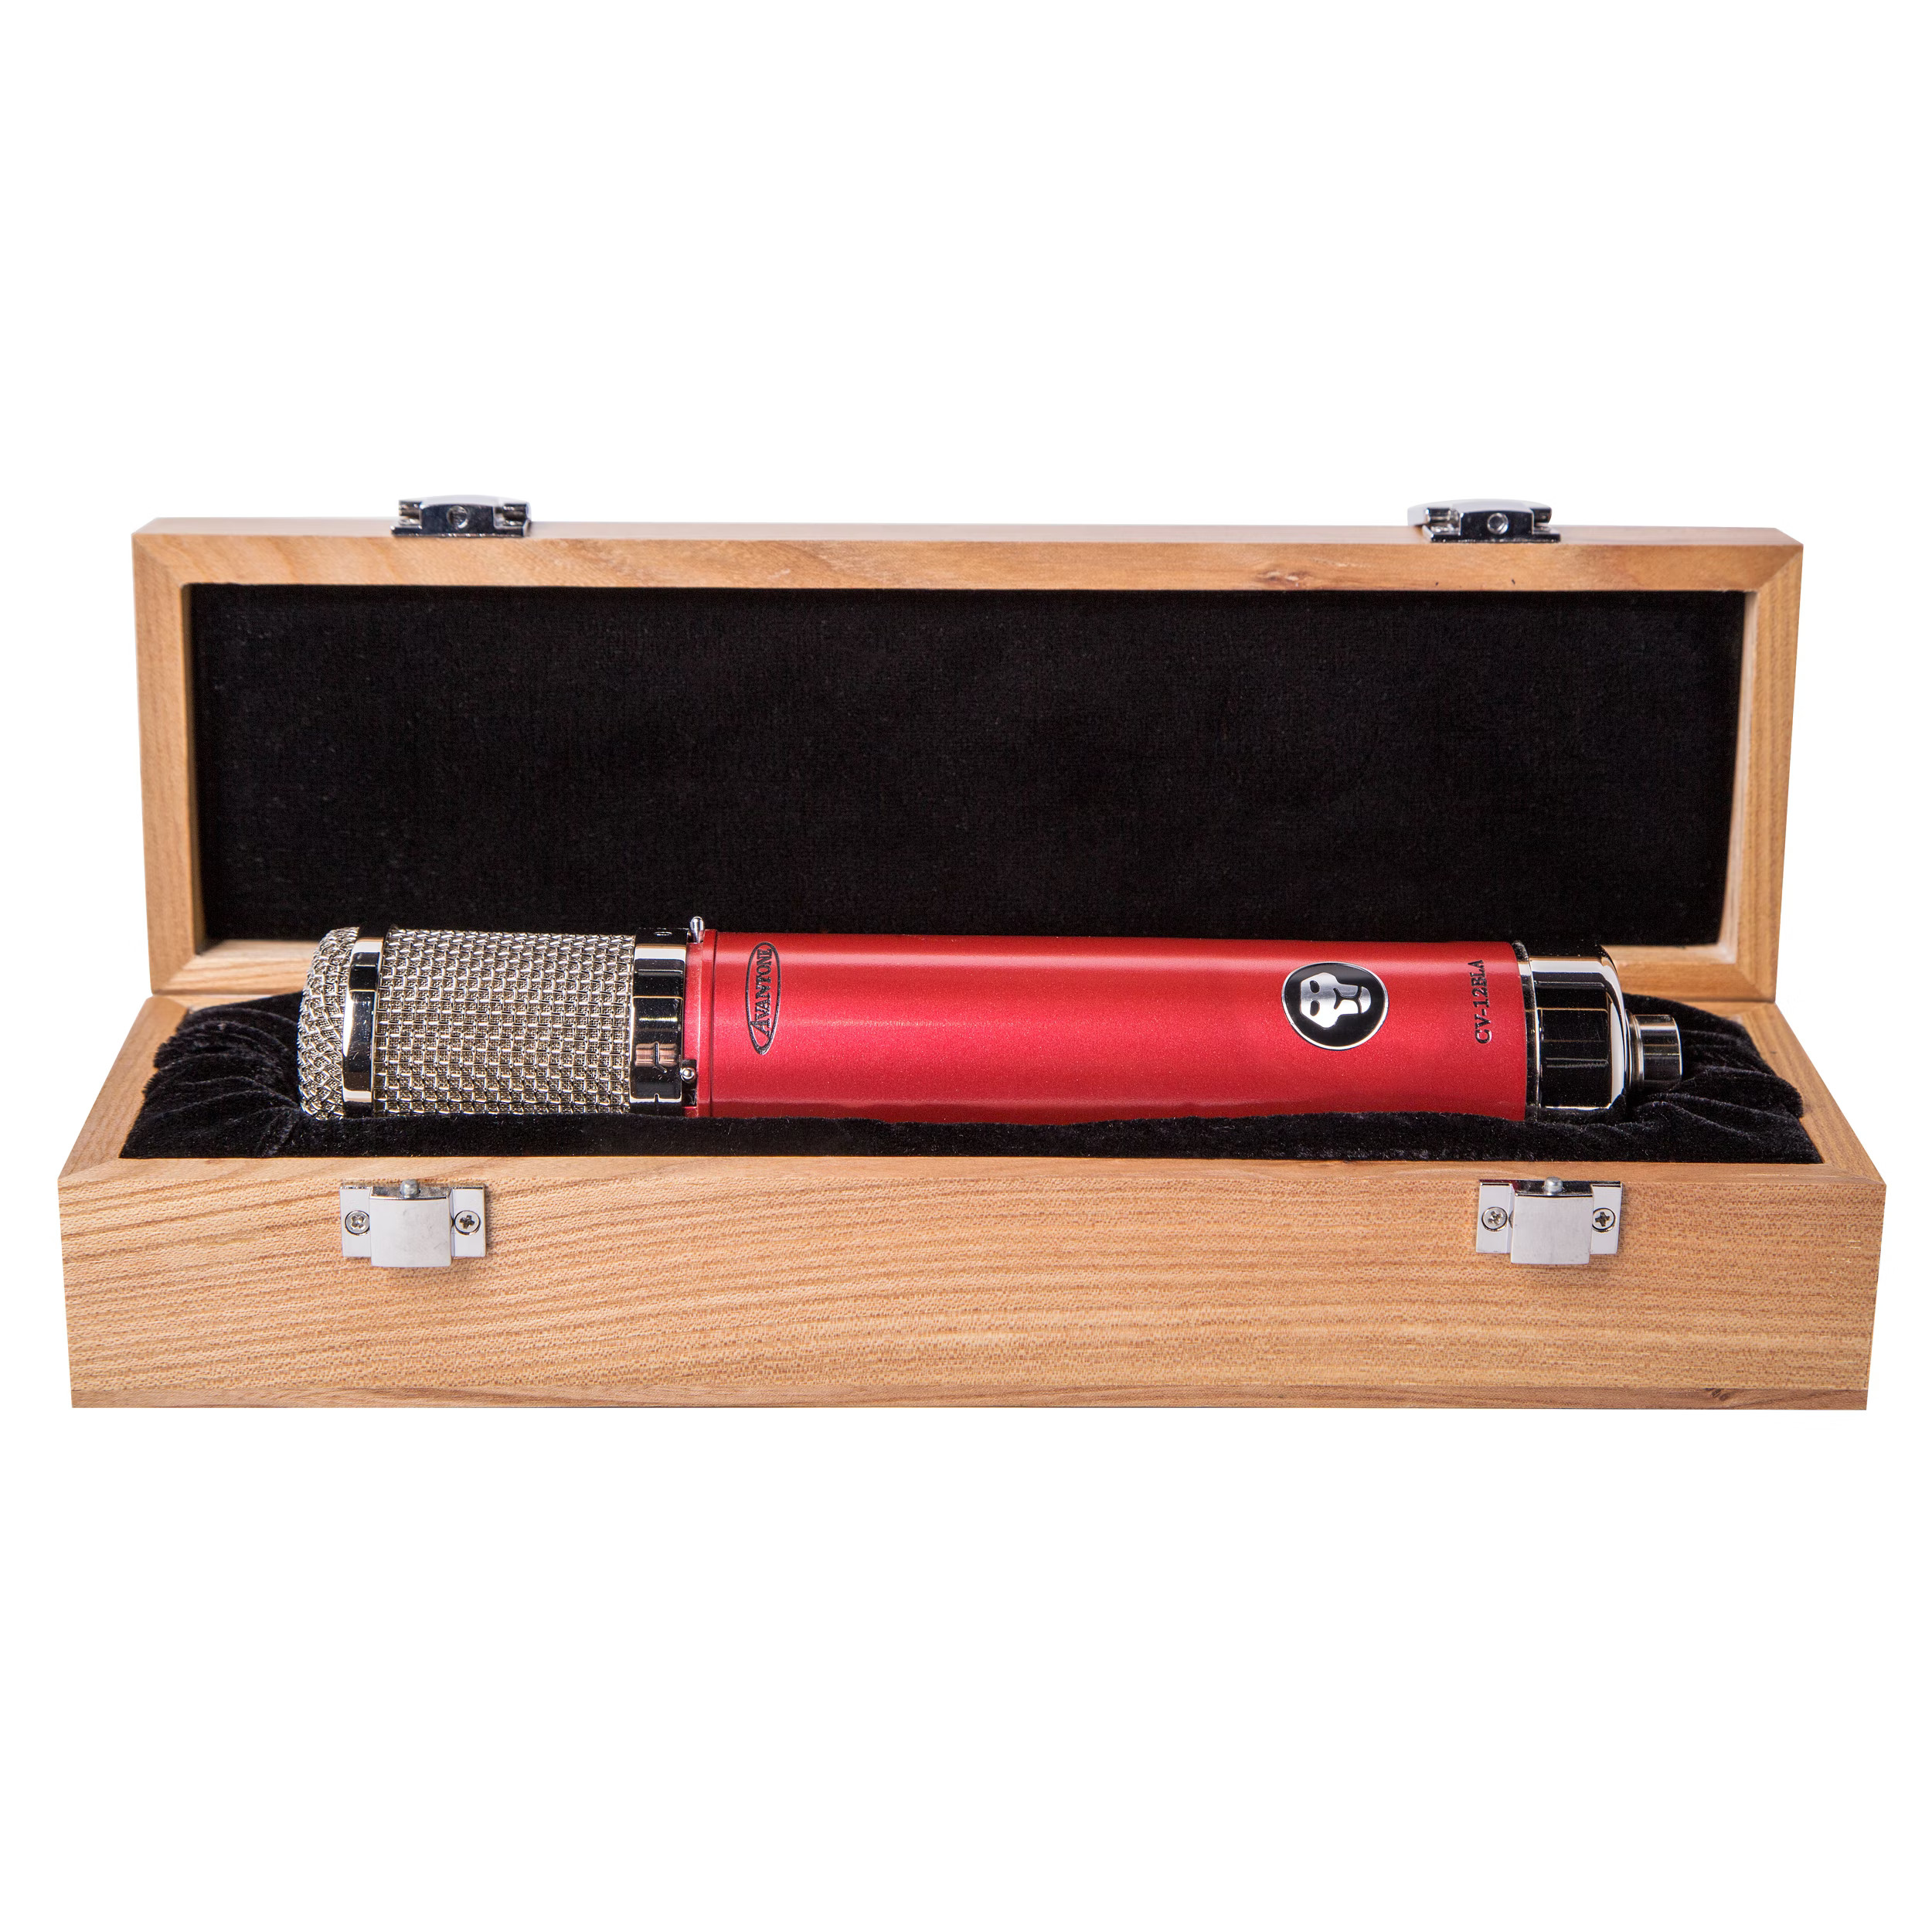 Avantone Pro CV-12-BLA Tube Condenser Microphone по цене 94 000 ₽